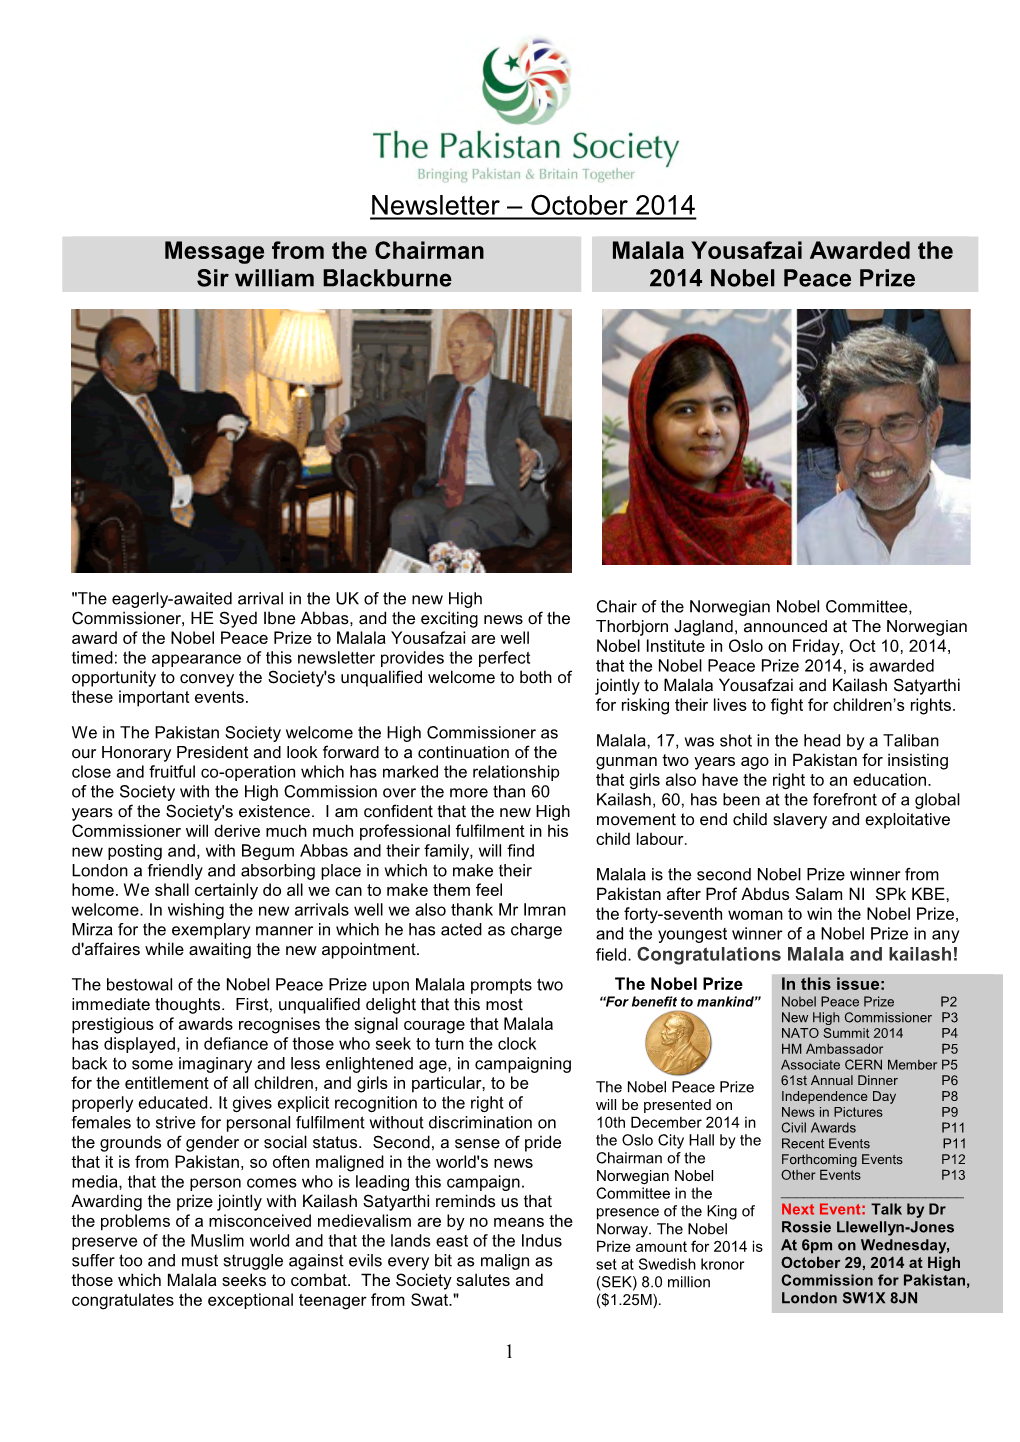 The Pakistan Society Newsletter January 2008